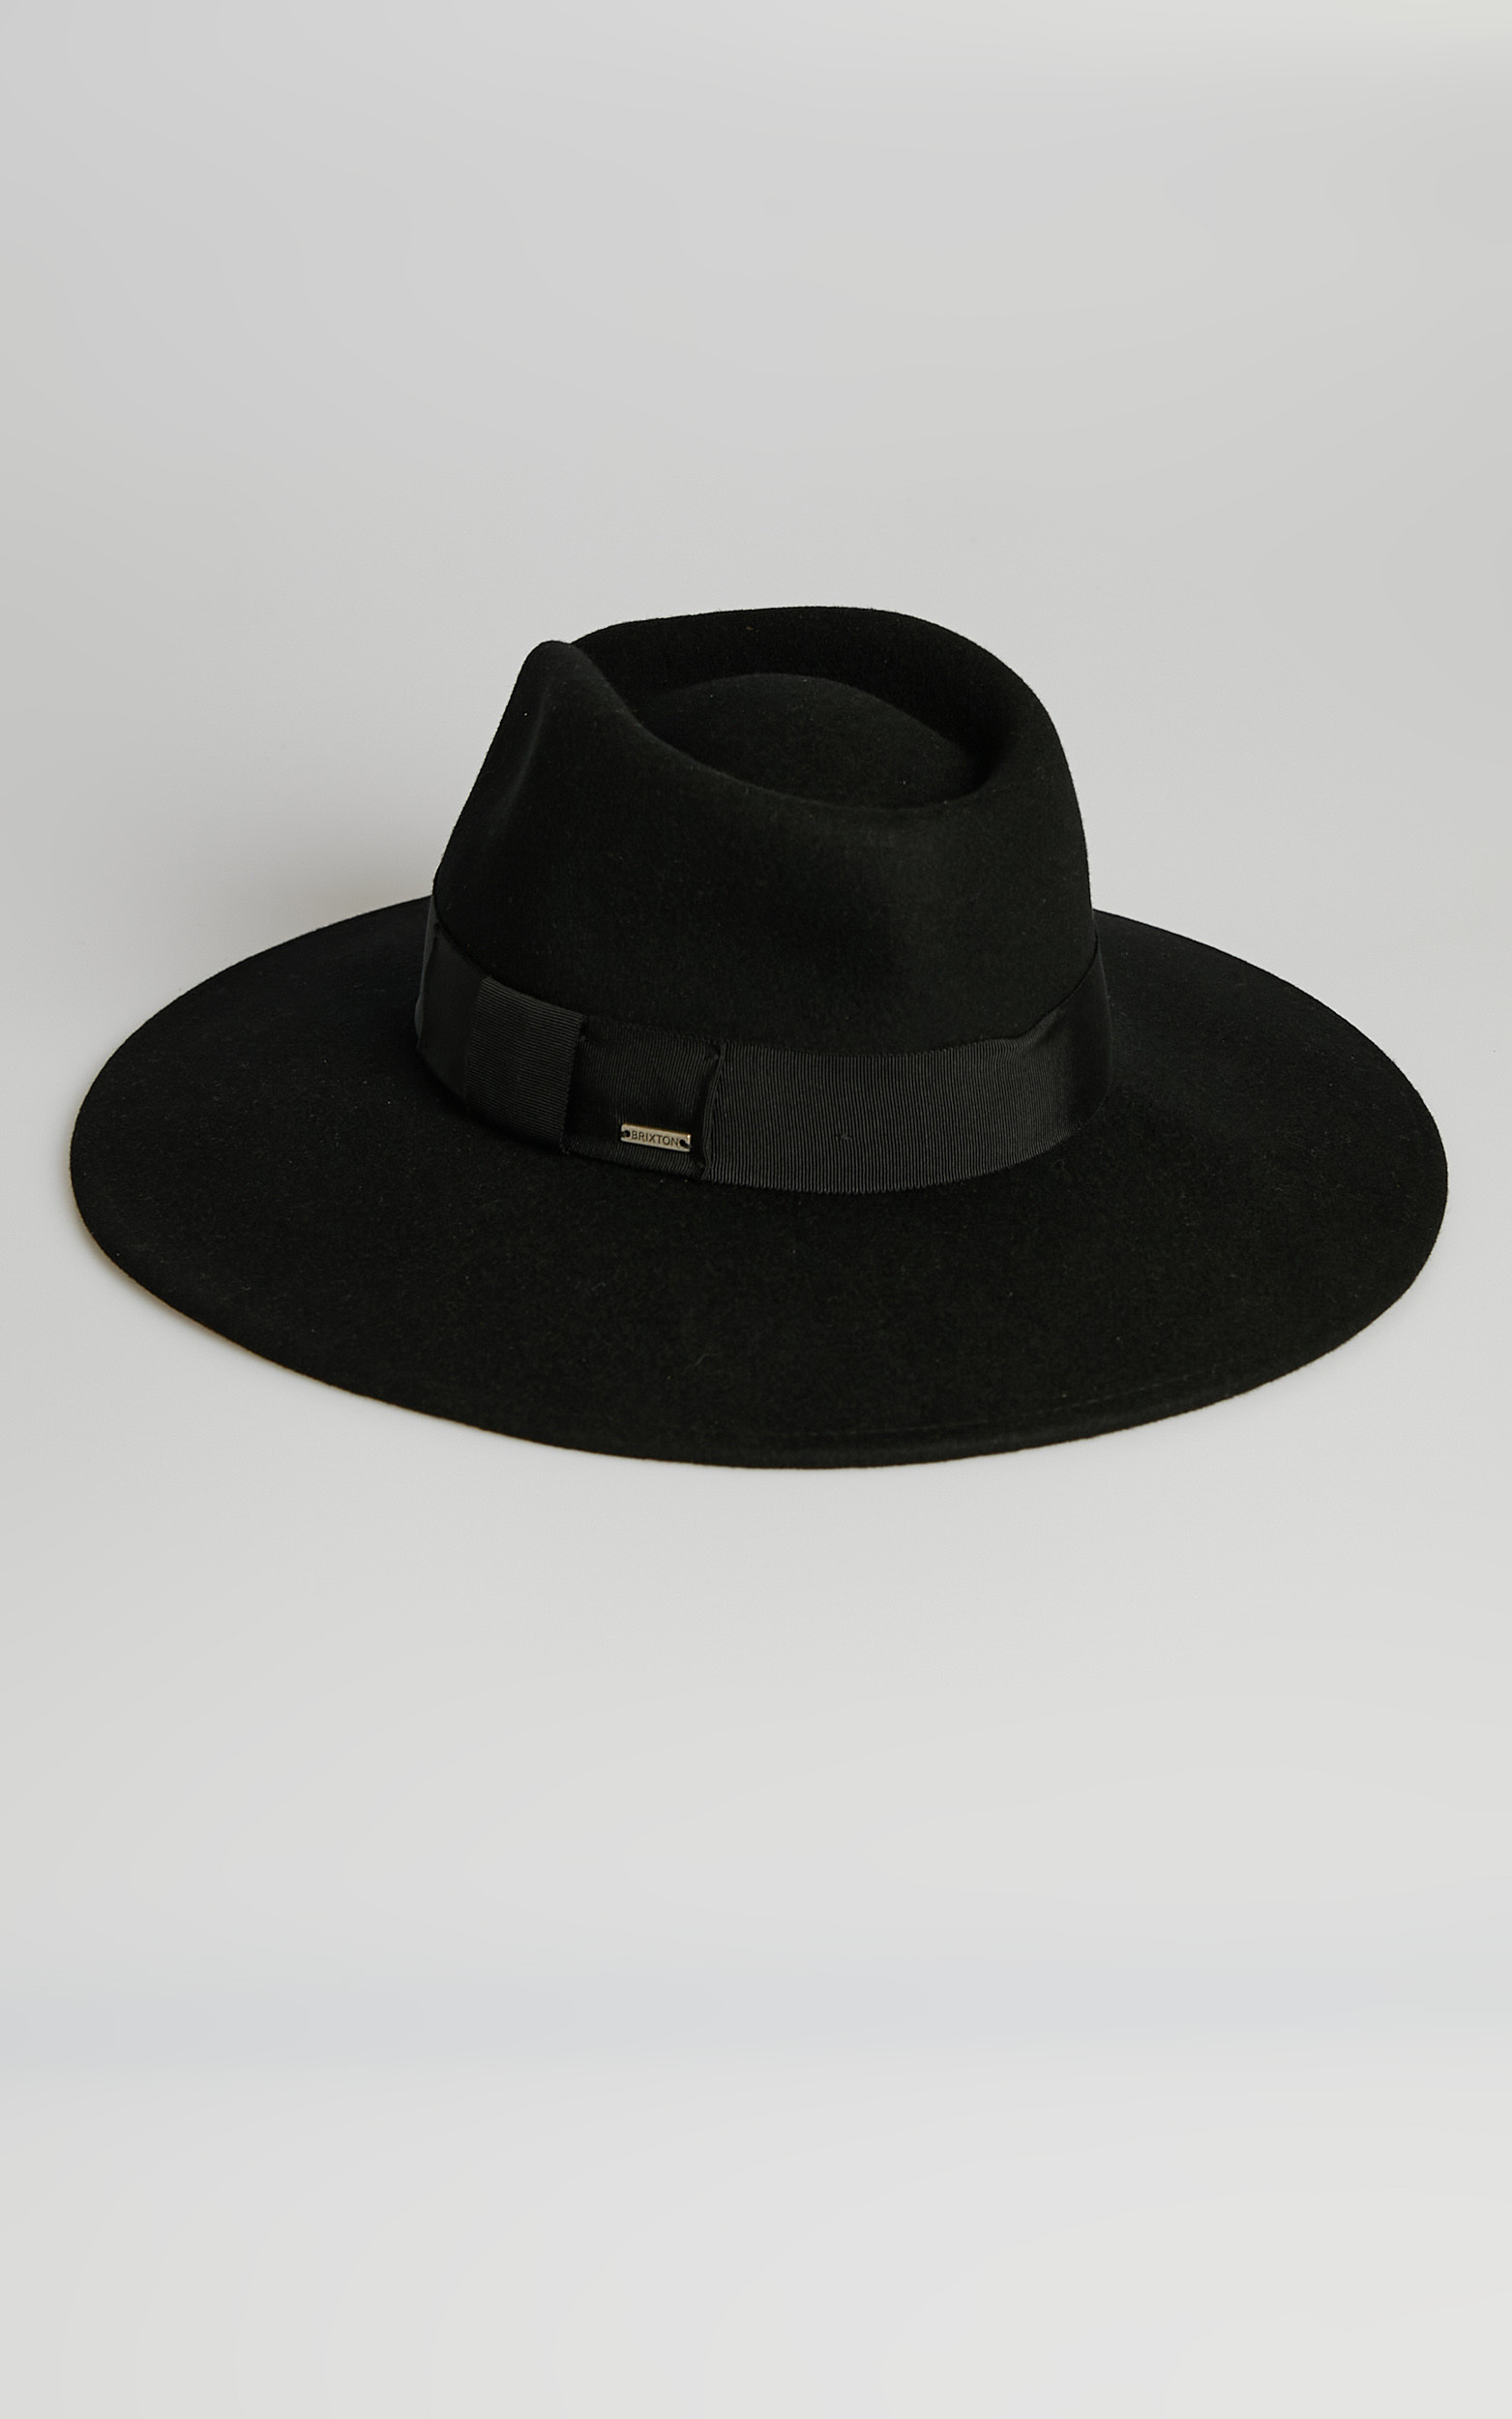 Brixton - Joanna Felt Hat in Black - M, BLK1, hi-res image number null